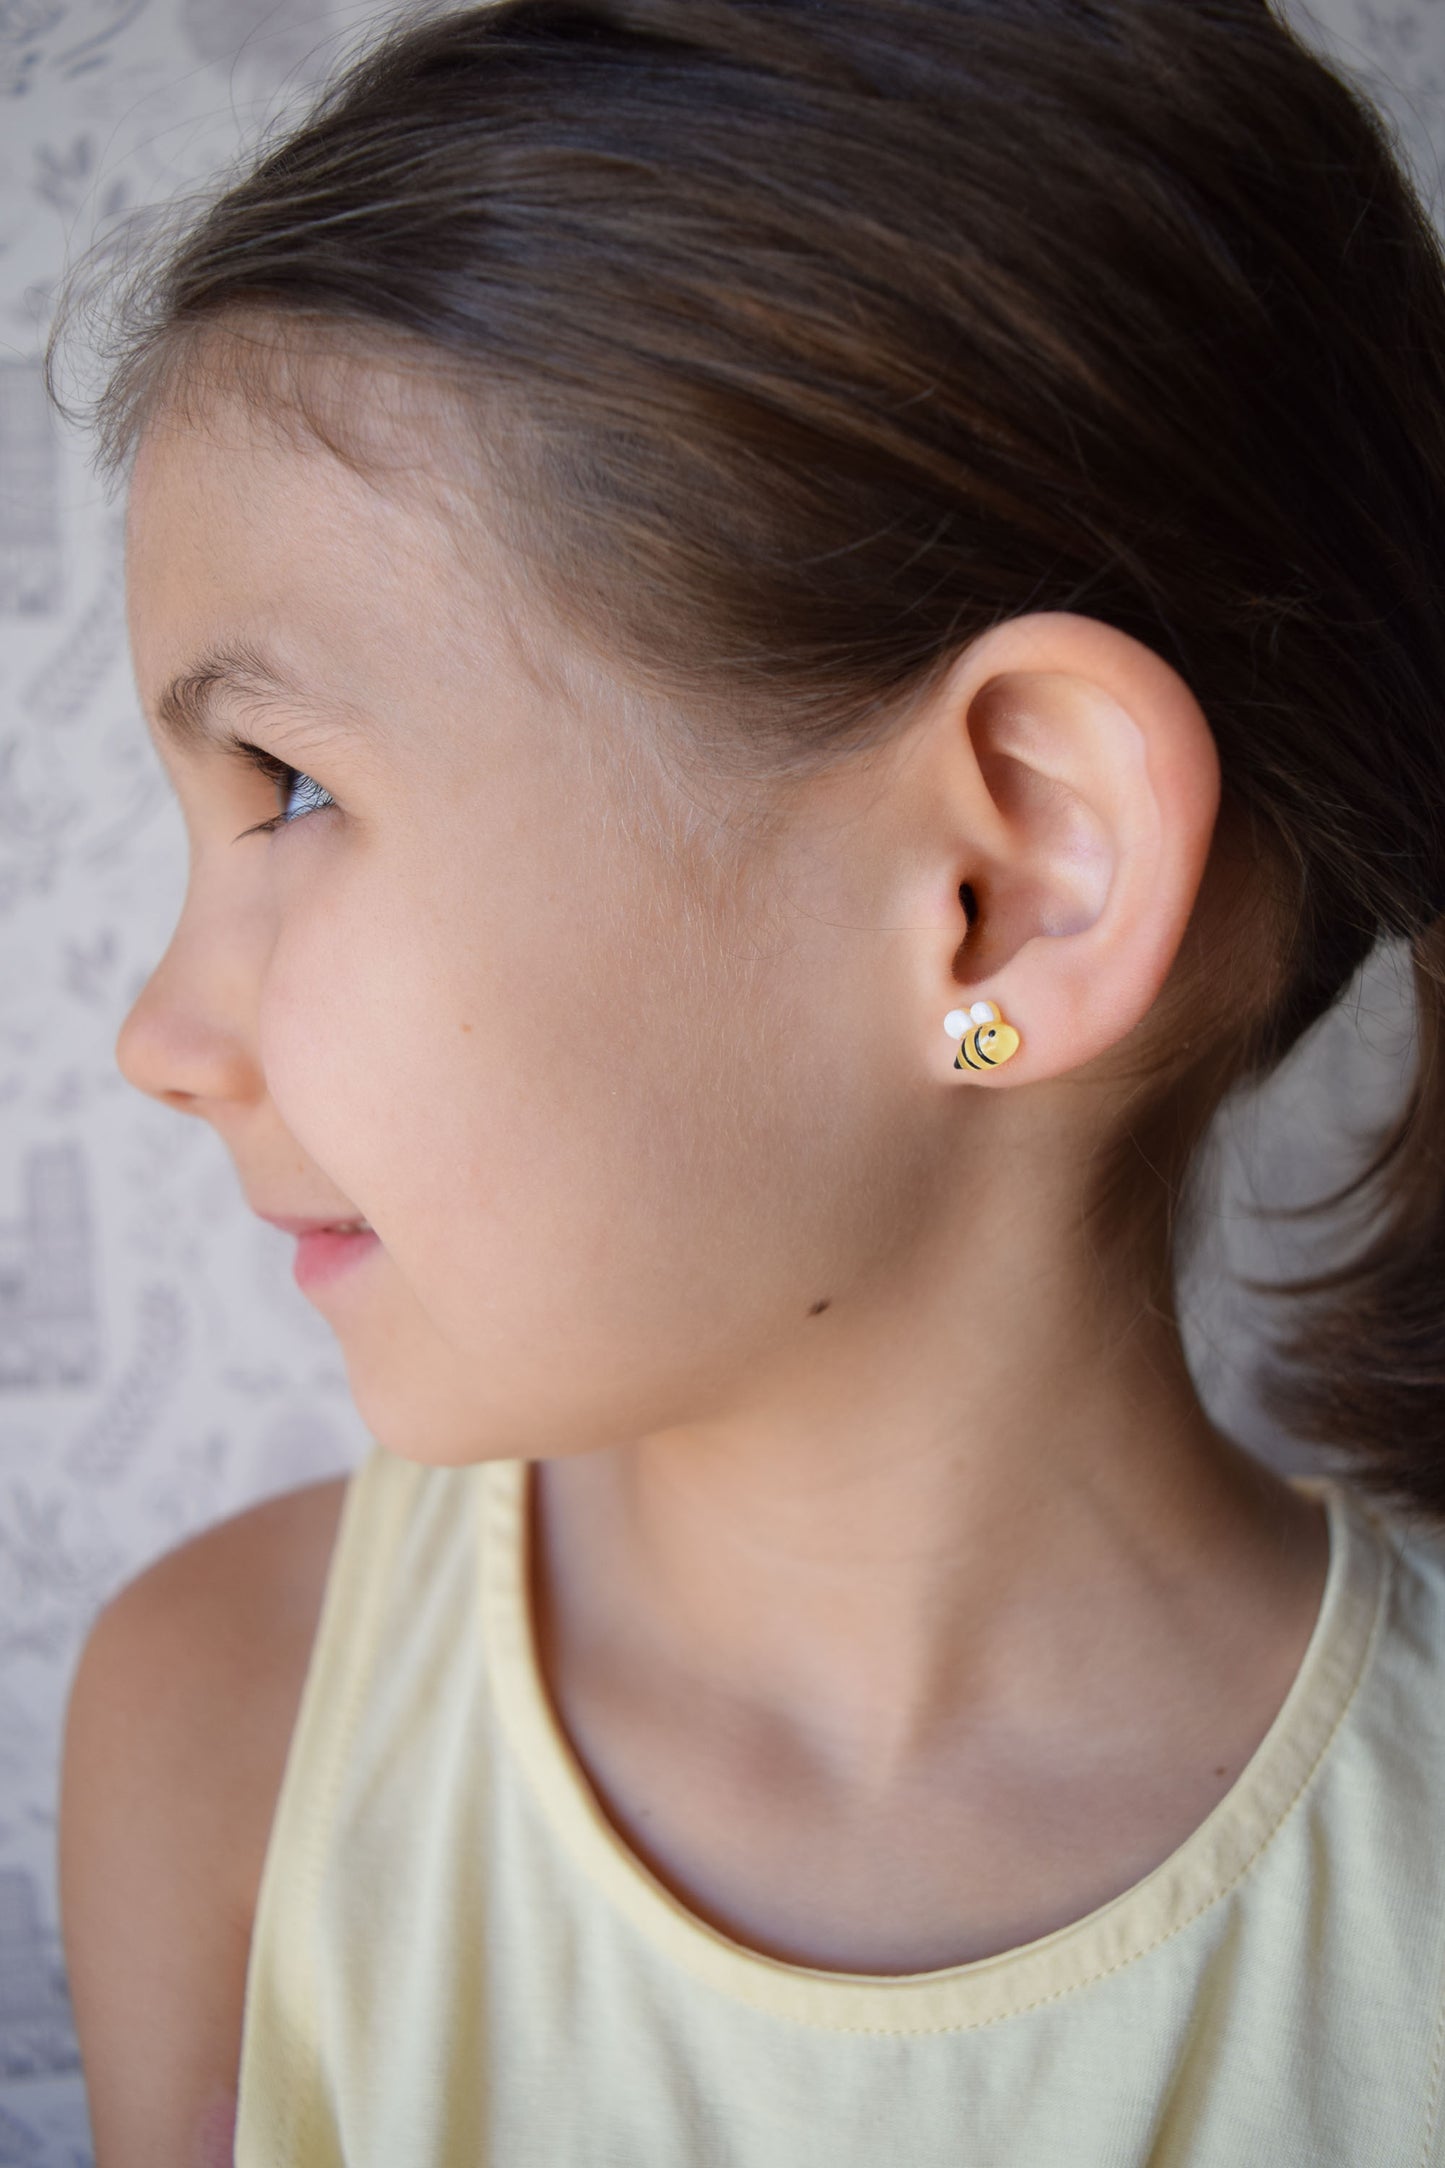 saint earrings for girls, catholic saint earrings, catholic girl earrings, abigail earrings, st abigail, beekeeper, bee earrings